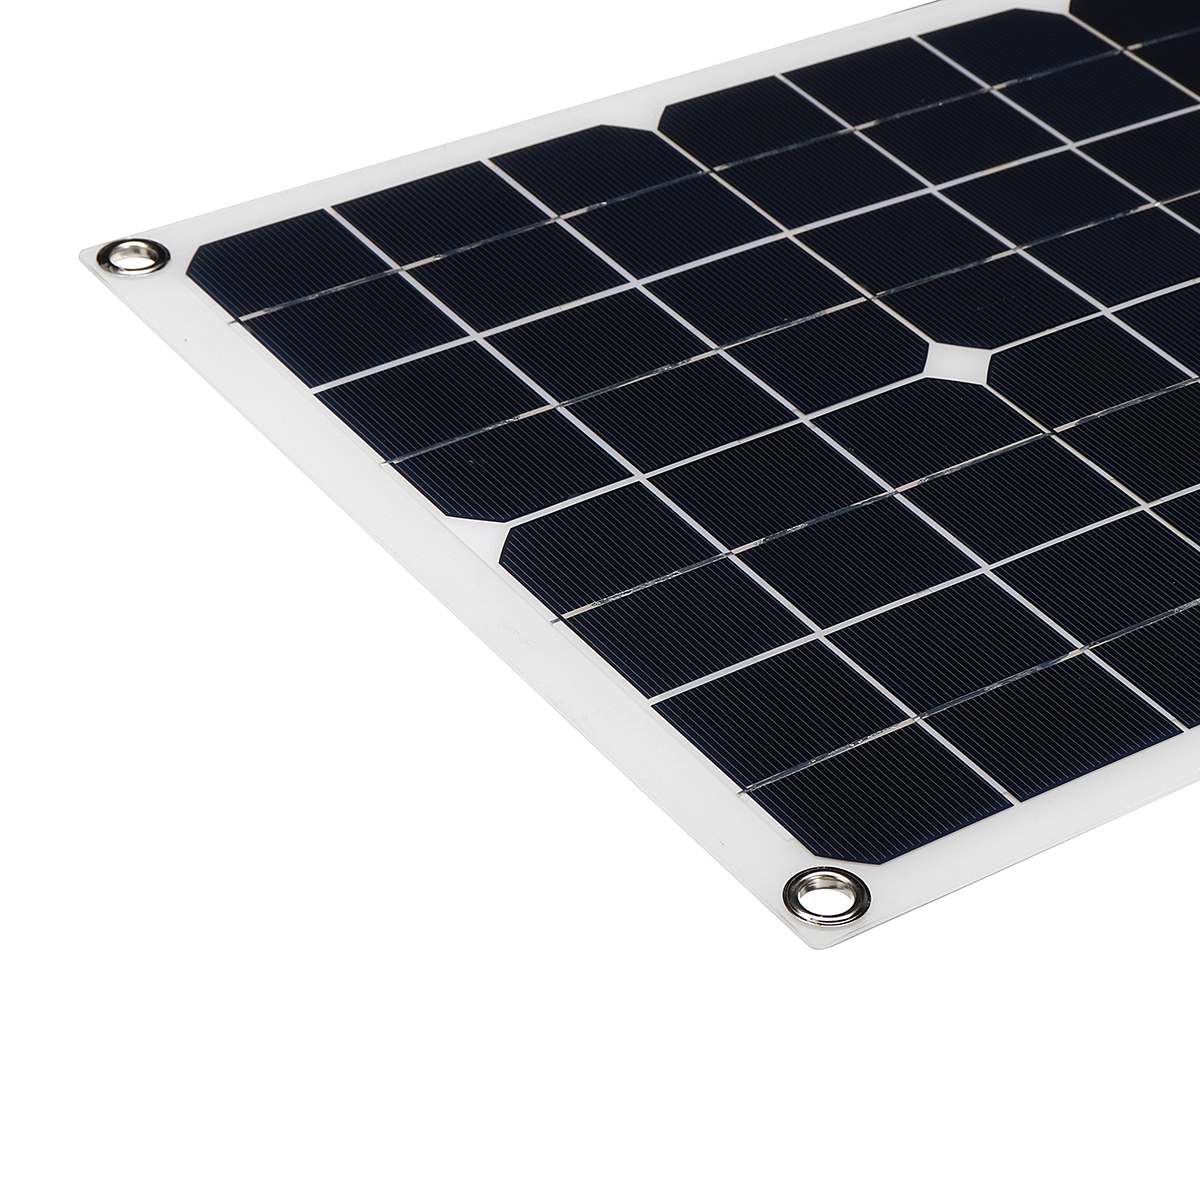 20W 430*280*2.5mm Monocrystalline Solar Panel with 18V DC Plug & 5V USB Output High Efficiency & Light Weight 32